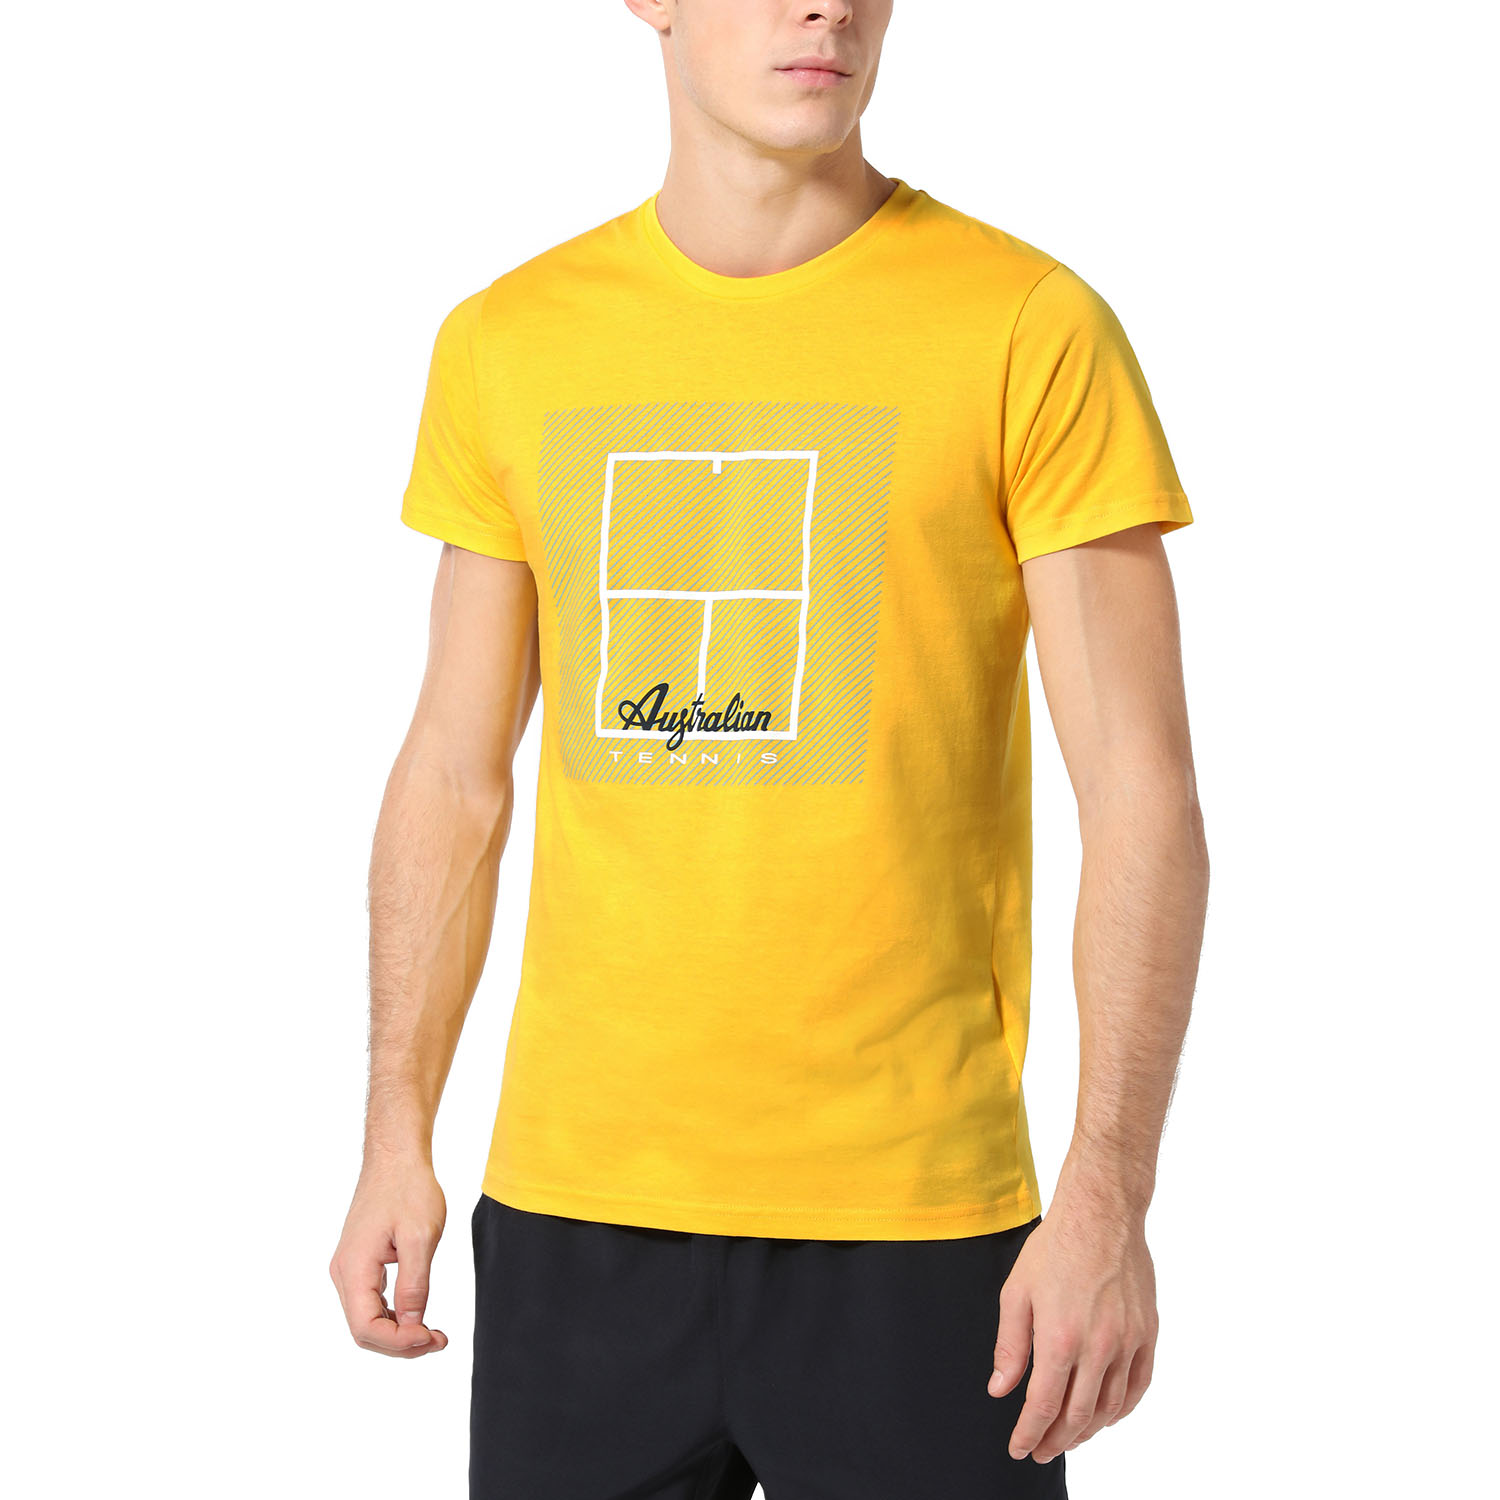 Australian Court Camiseta - Zafferano